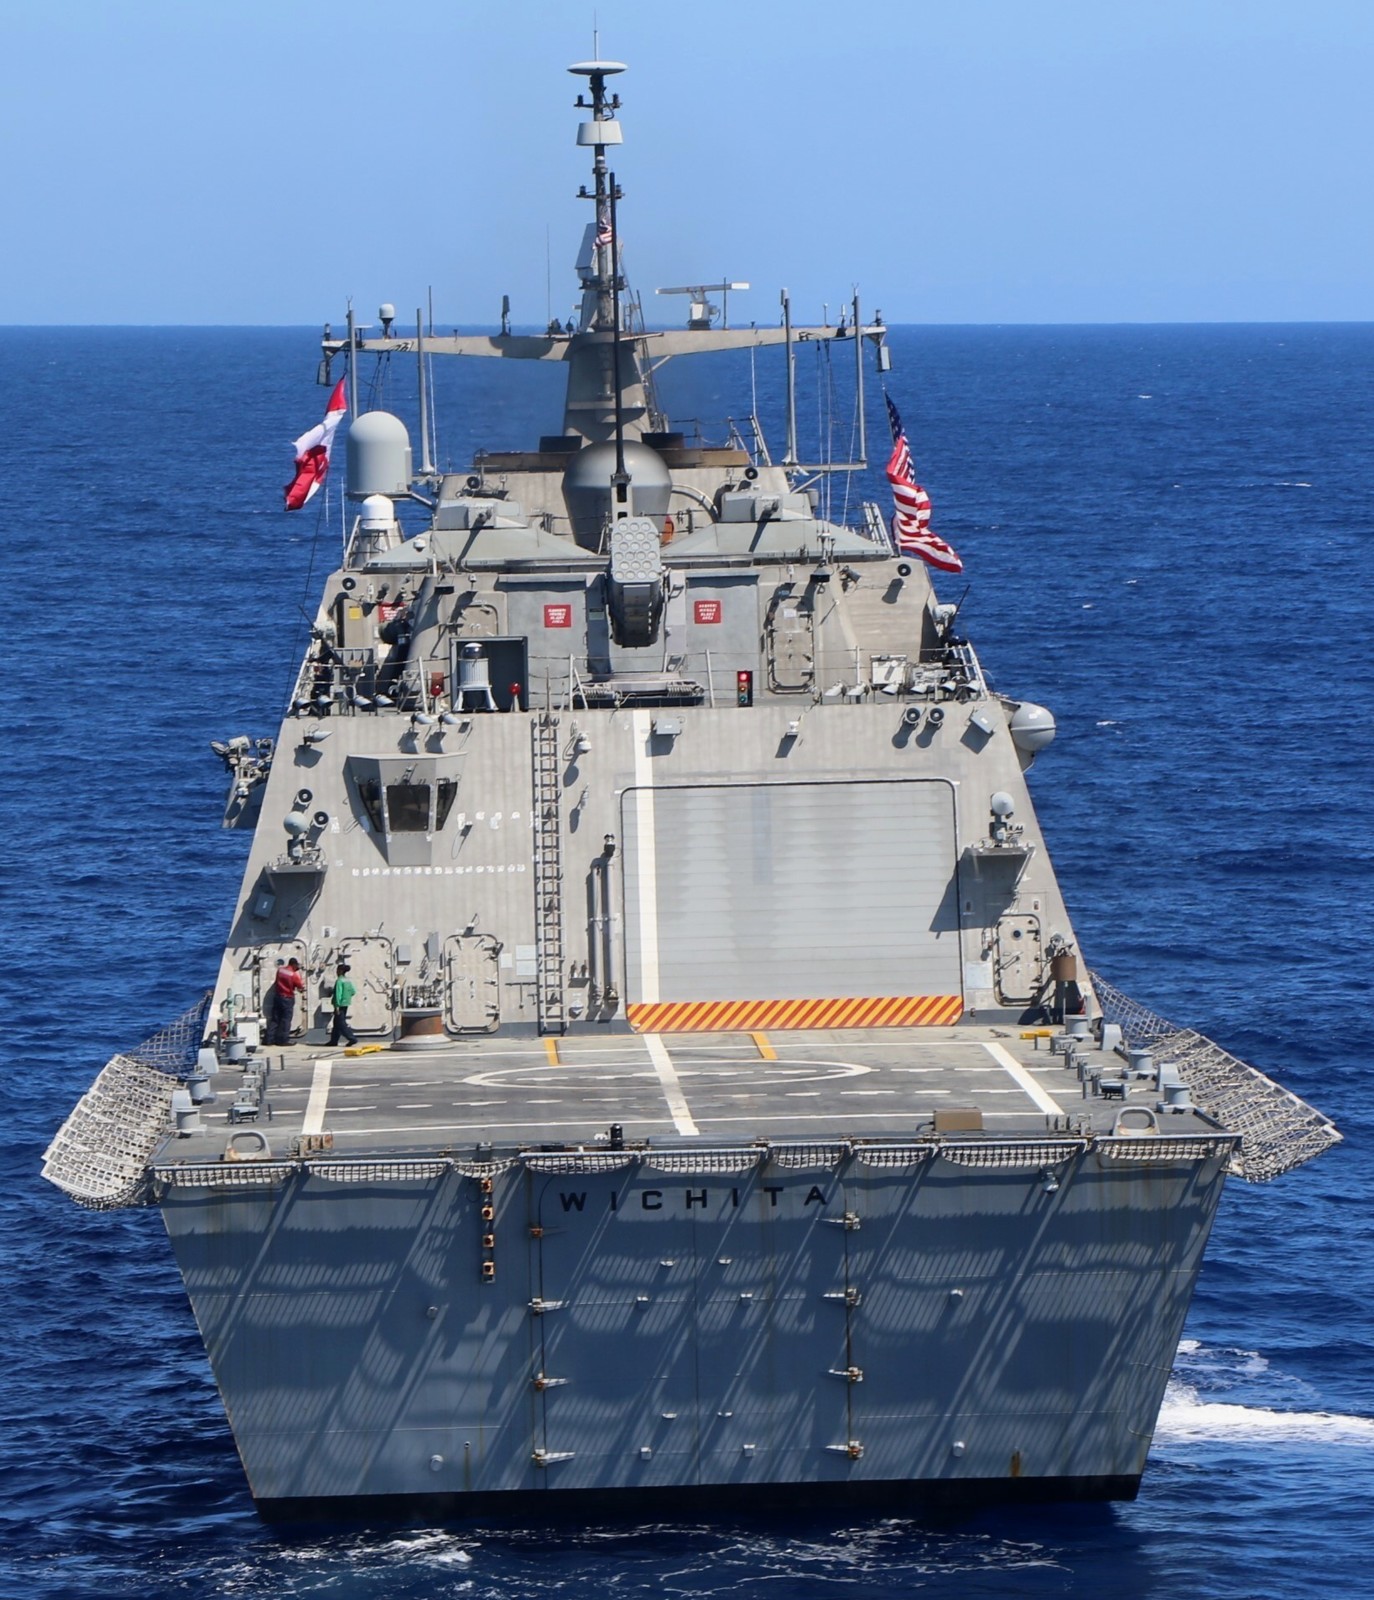 lcs-13 uss wichita freedom class littoral combat ship us navy 30